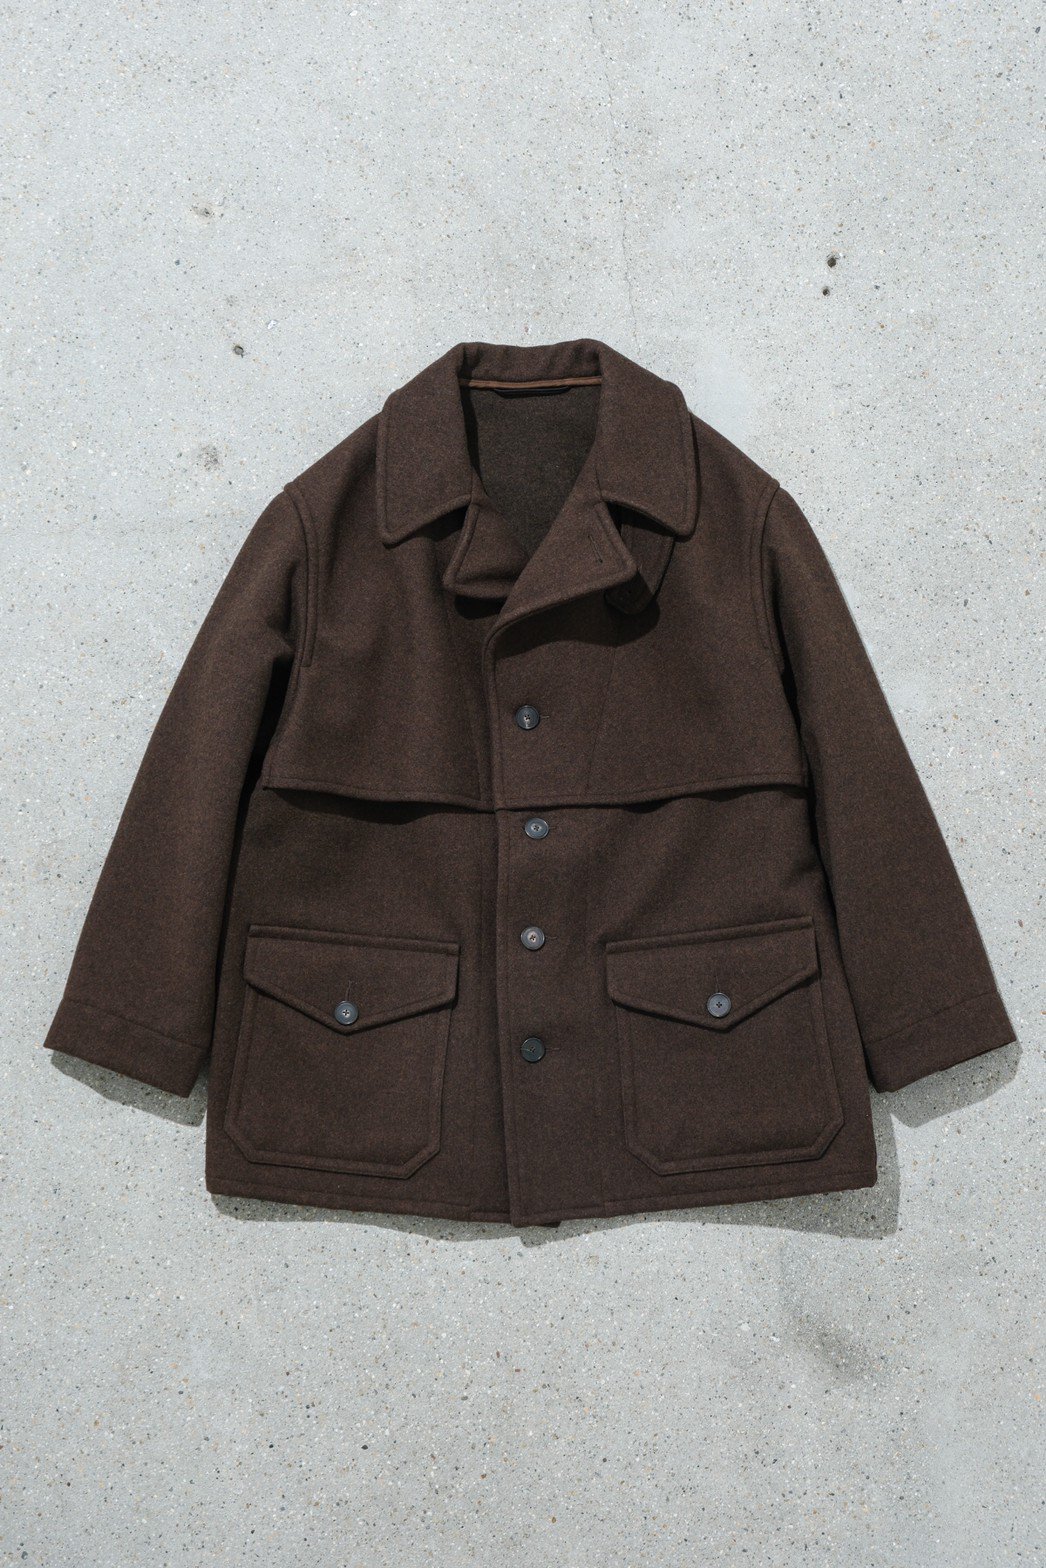 A.PRESSE / U.S.ARMY Mackinaw Coat